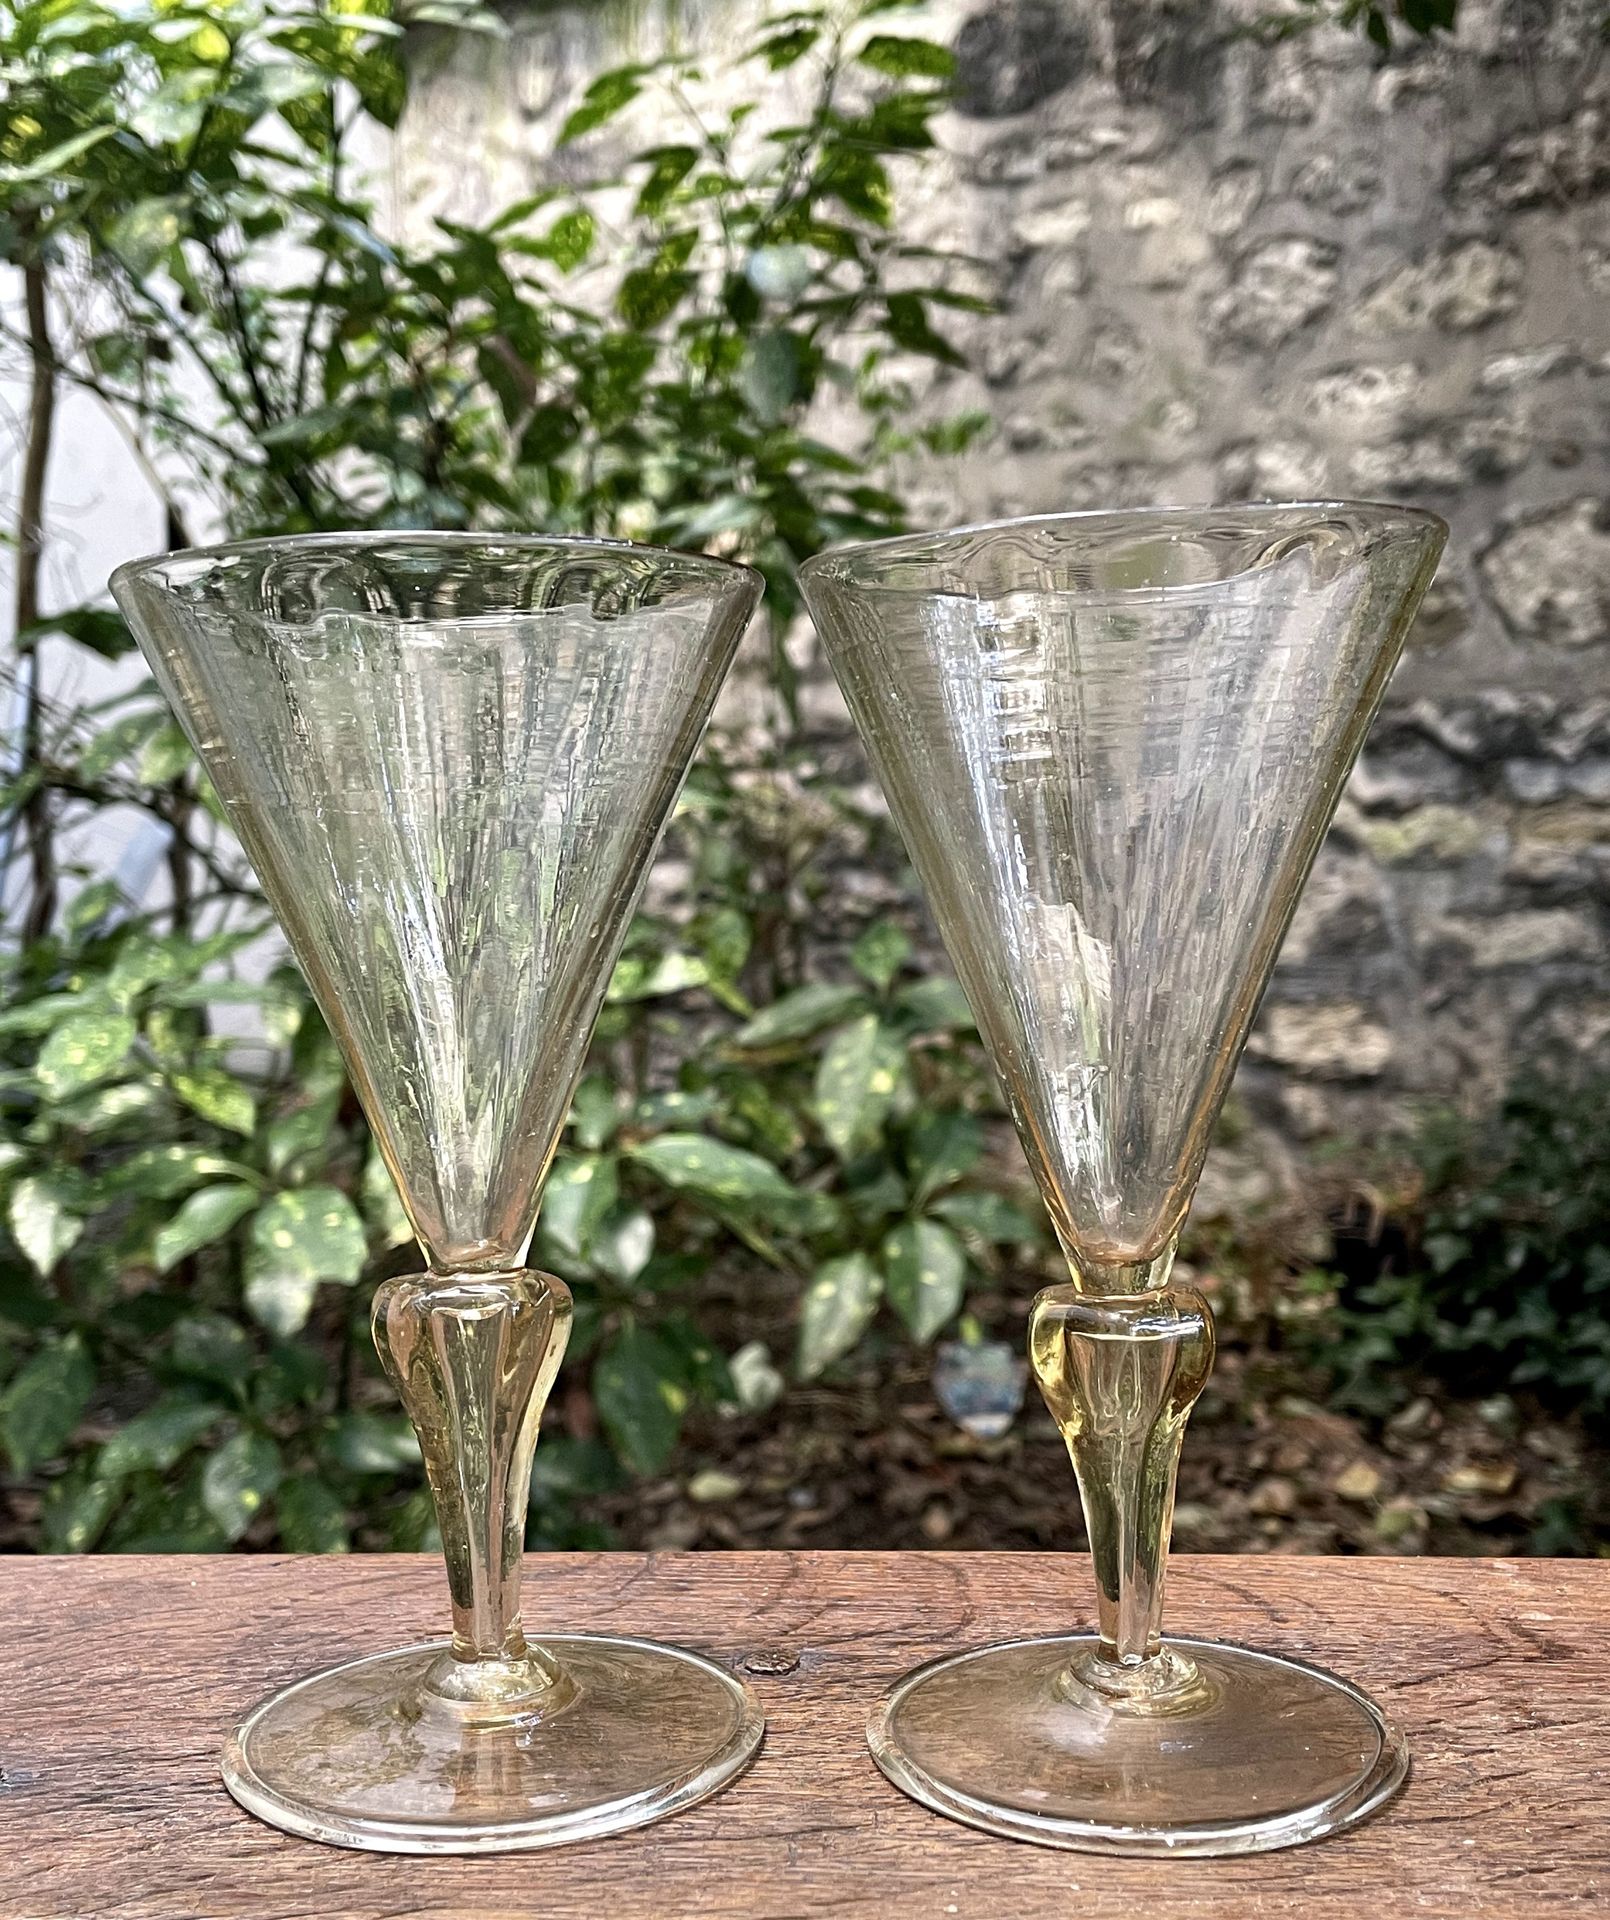 Null 地段包括 :

- 两只烟熏吹制的玻璃带柄杯。19世纪。高15,3厘米。

- 两只绿色的有柄玻璃杯。19世纪。高12,7厘米。